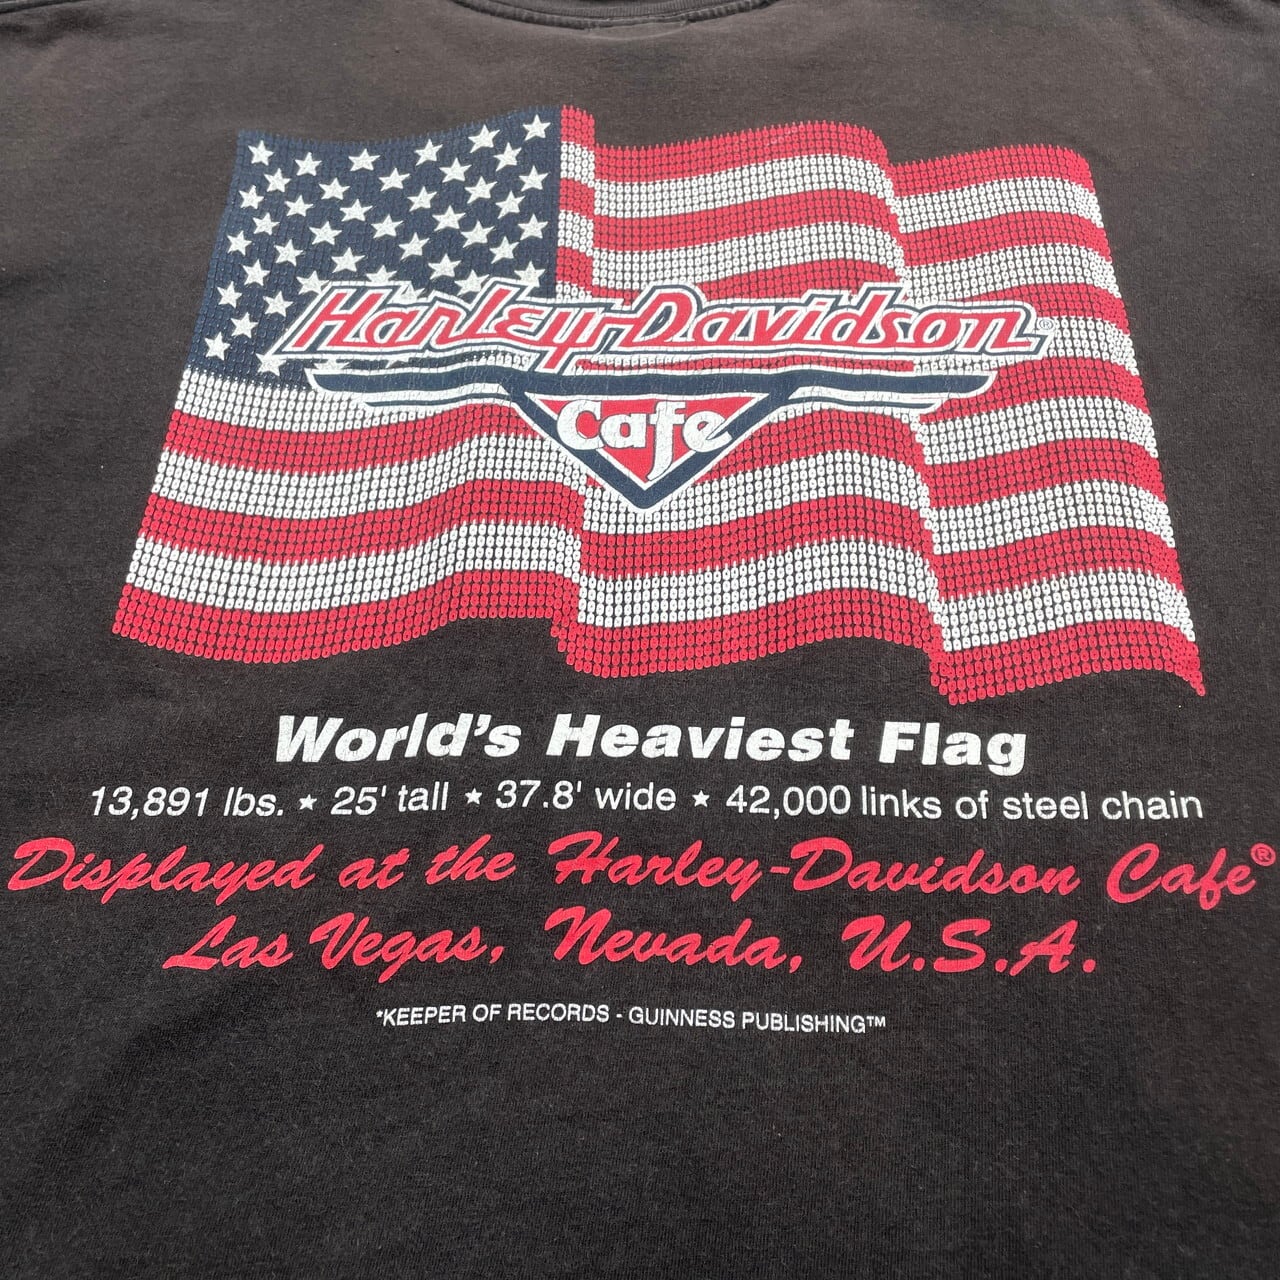 Harley-Davidson Cafe ハーレーダビッドソンカフェ ラスベガス